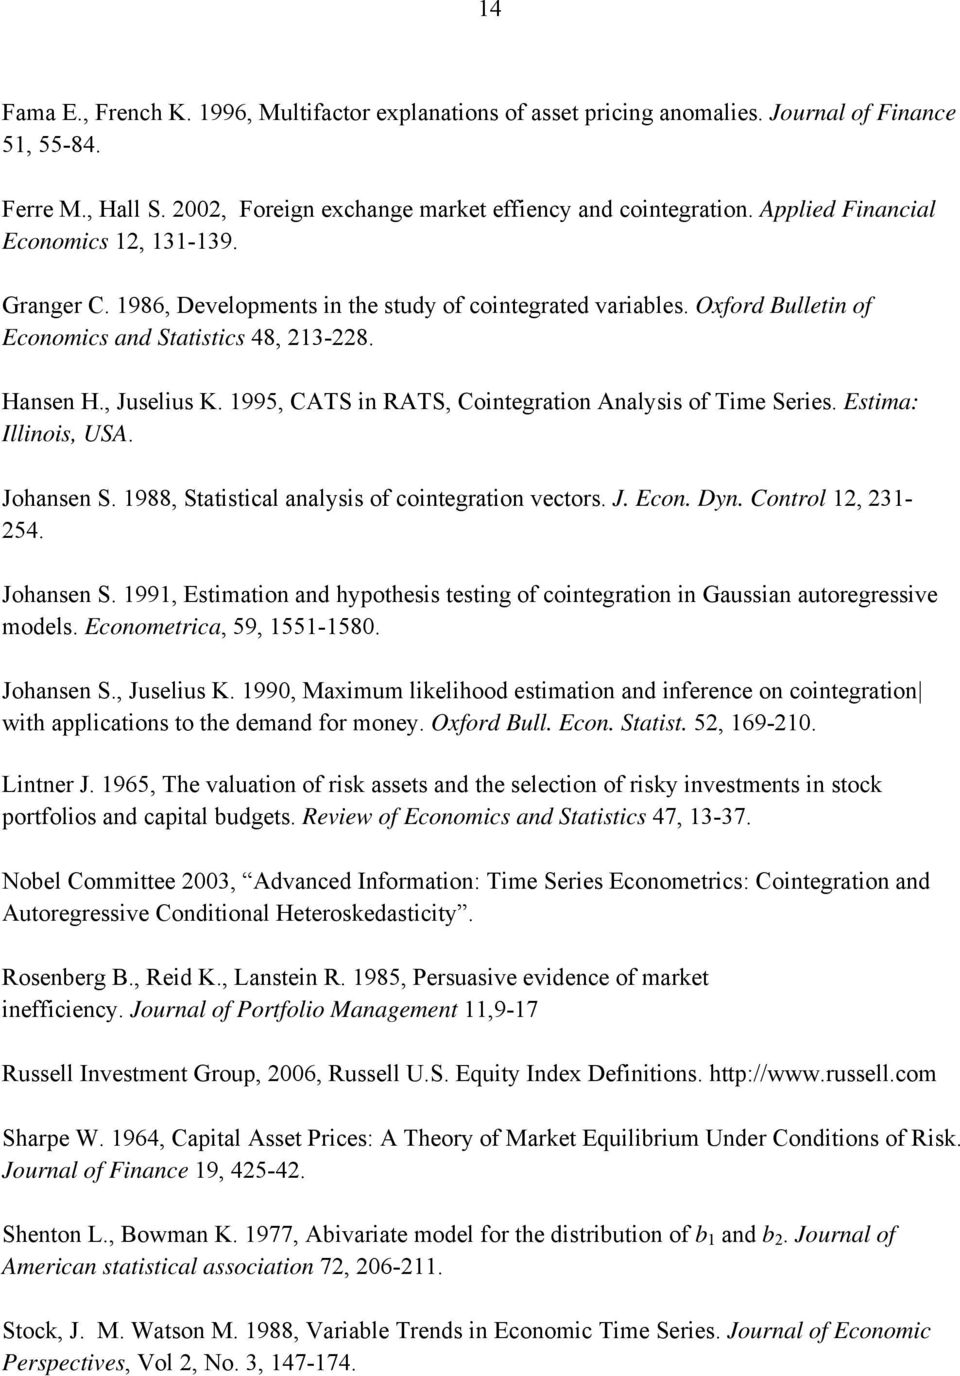 1995, CATS n RATS, Conegraon Analyss of Tme Seres. Esma: Illnos, USA. Johansen S. 1988, Sascal analyss of conegraon vecors. J. Econ. Dyn. Conrol 12, 231-254. Johansen S. 1991, Esmaon and hypohess esng of conegraon n Gaussan auoregressve models.